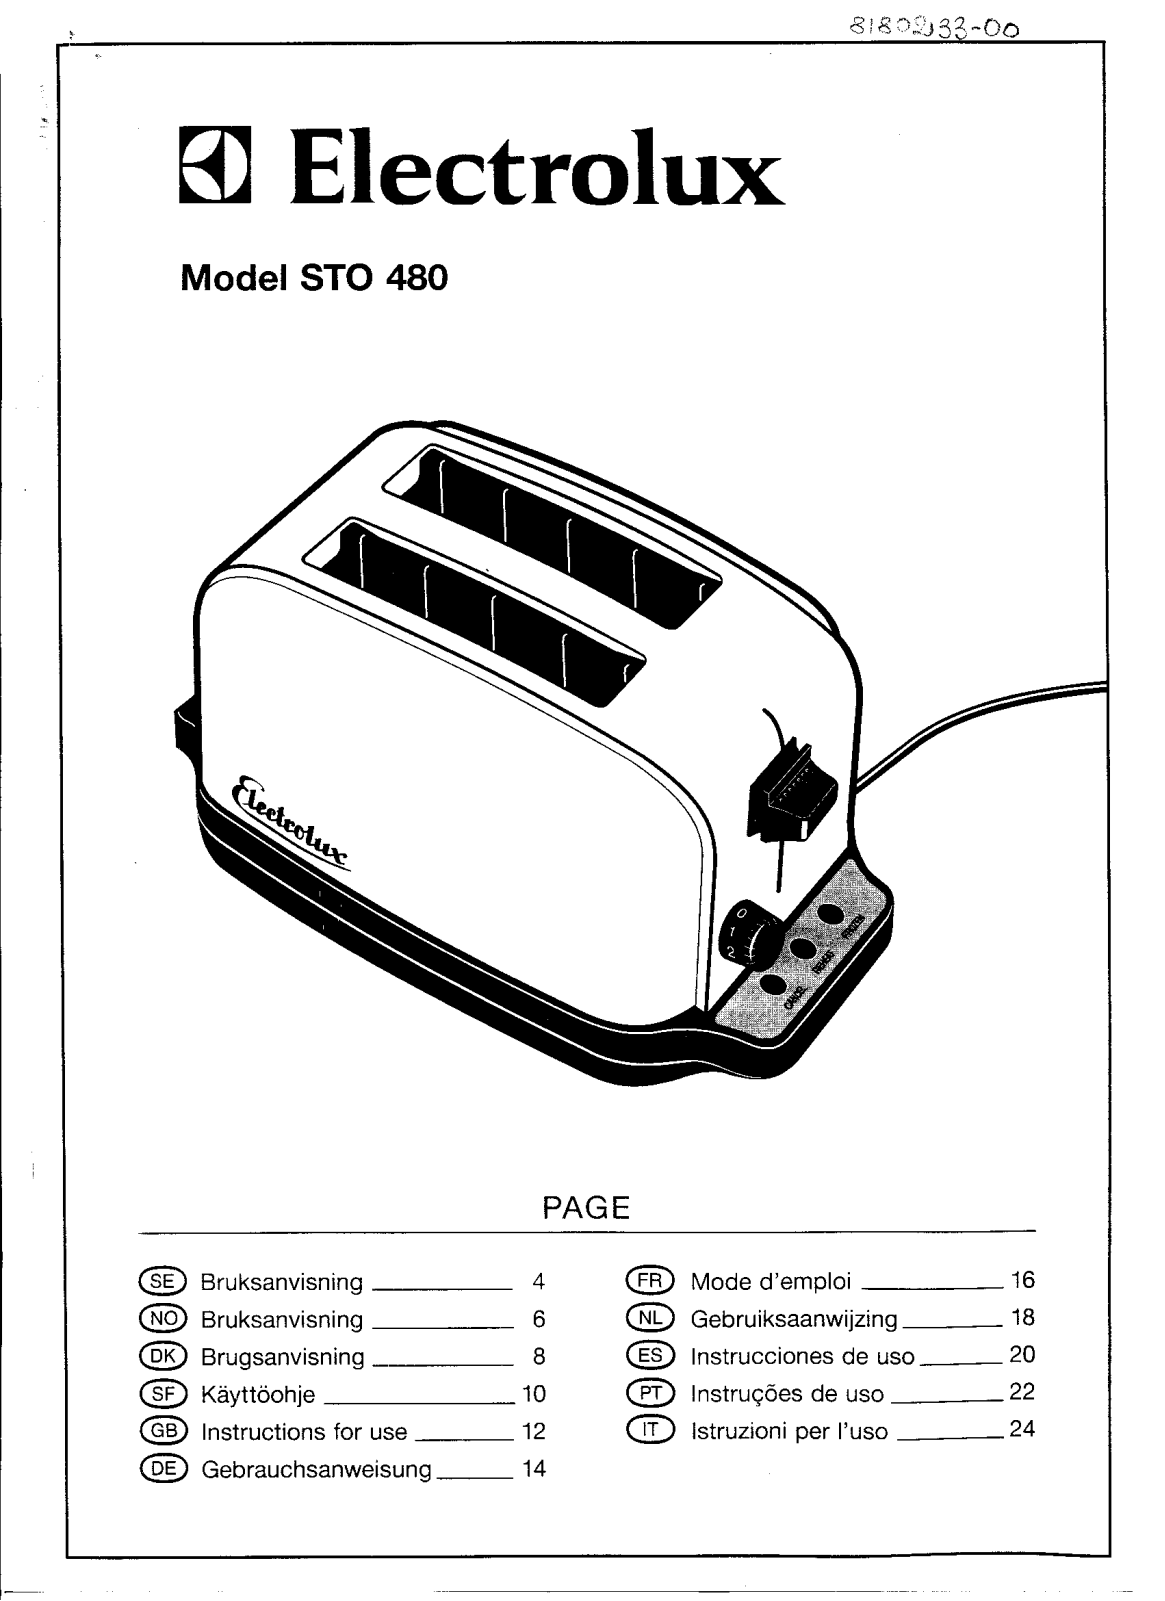 electrolux STO480 User Manual